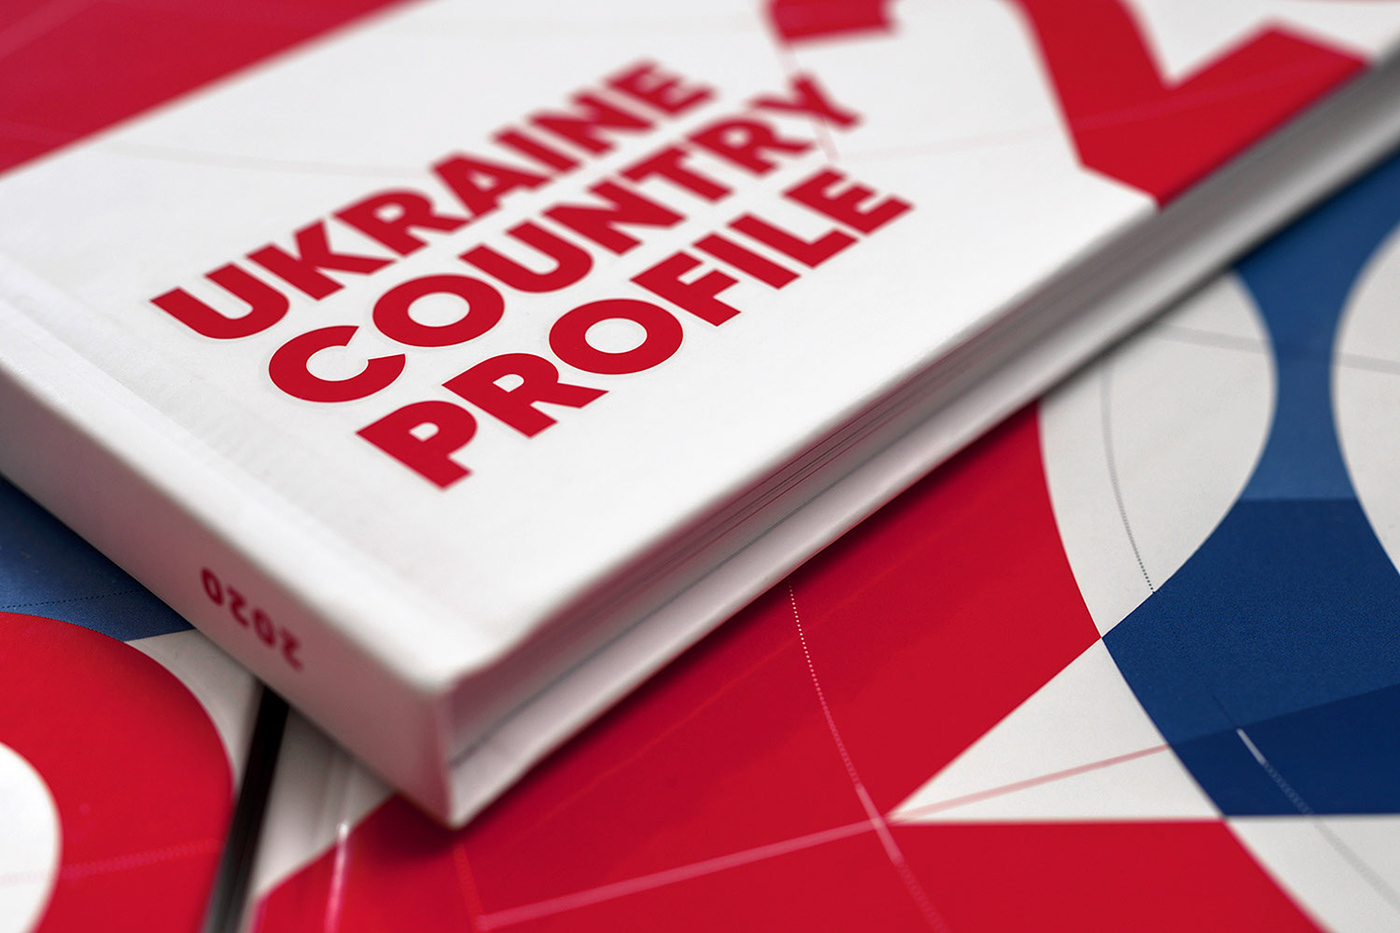 Acc Ukraine Country Profile 2020 On Behance